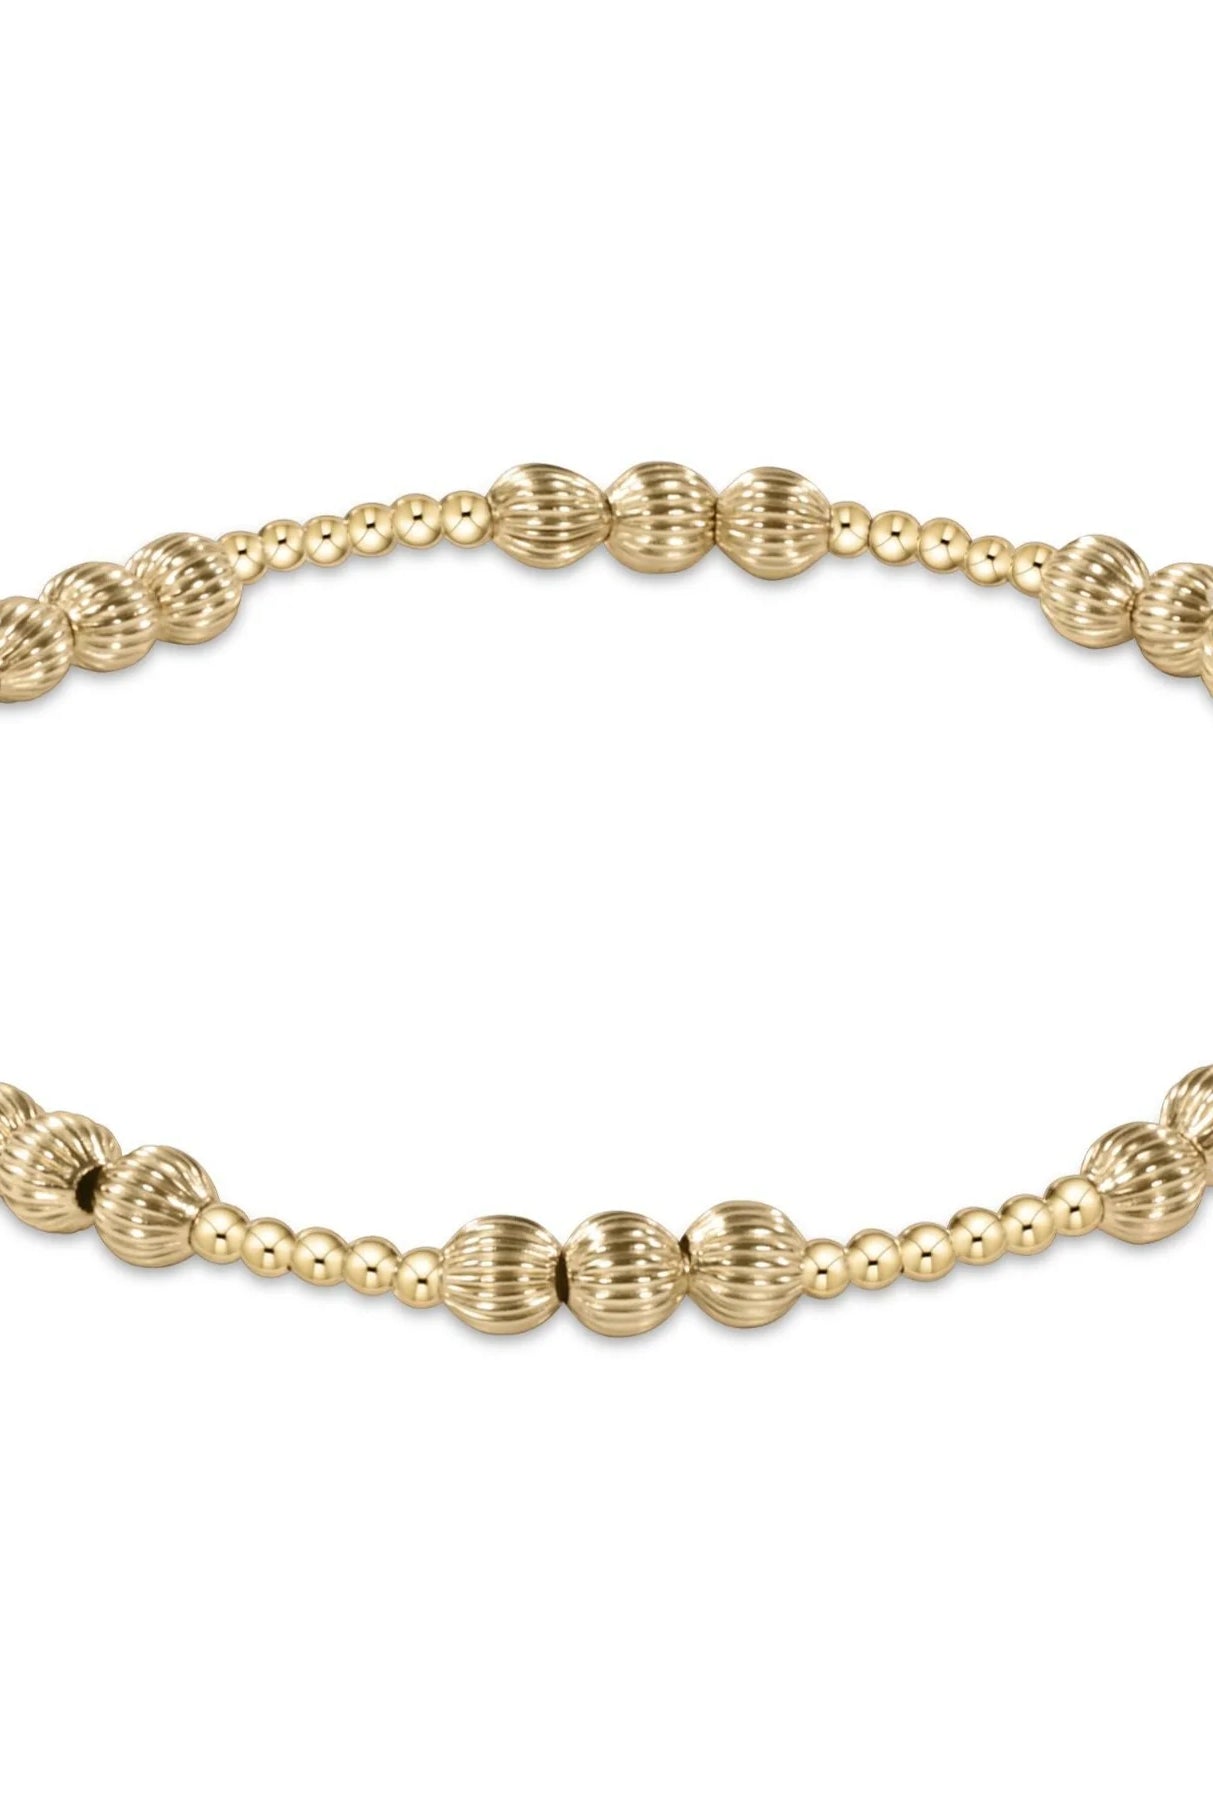 4mm Dignity Joy Gold Bracelet-Bracelets-eNewton-The Lovely Closet, Women's Fashion Boutique in Alexandria, KY